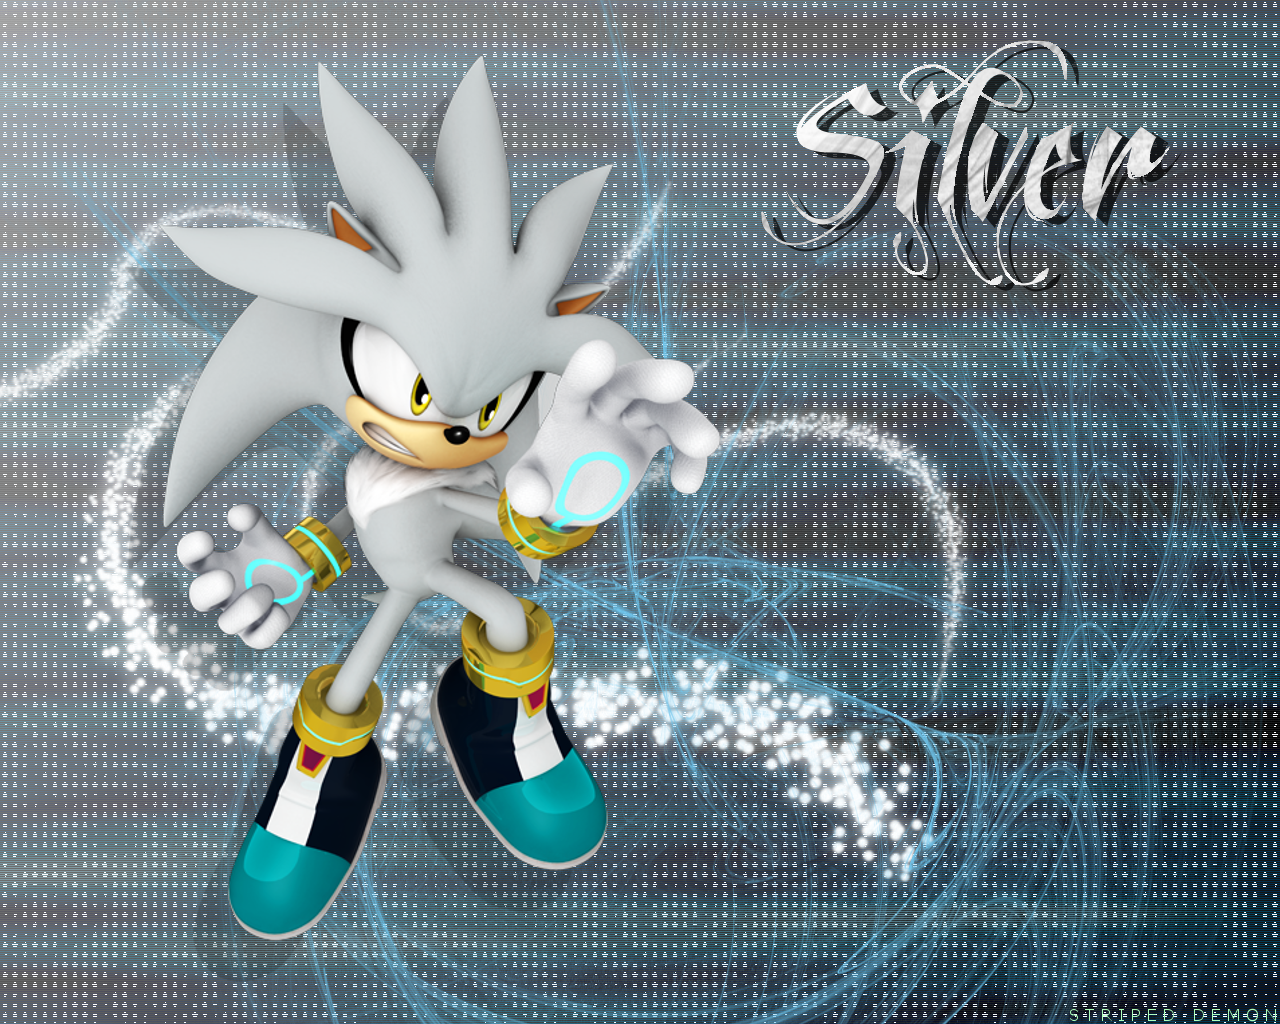 Silver the Hedgehog Wallpaper. Shadow